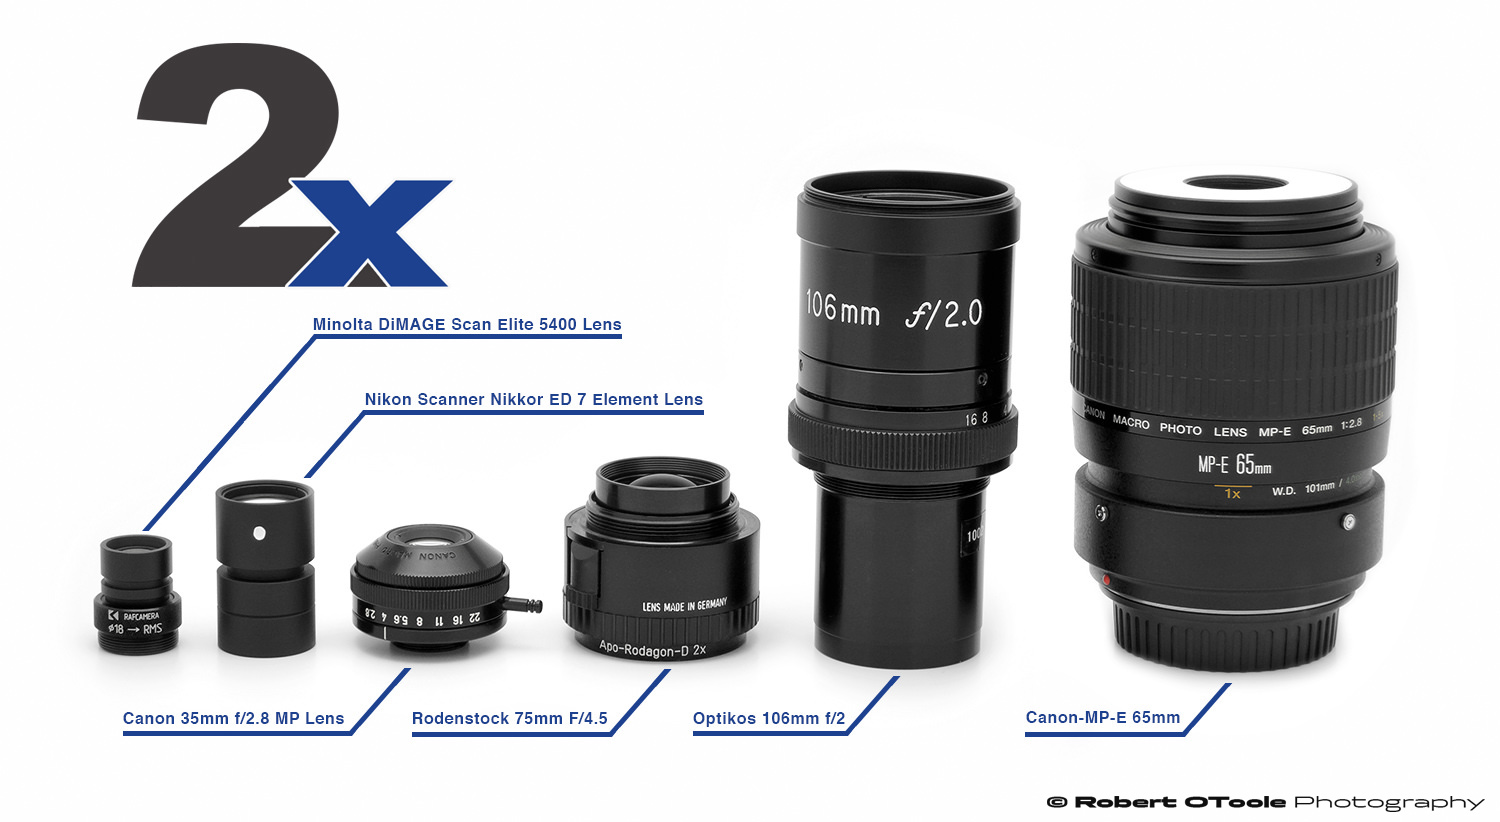 1PC Linos Apo-Rodagon-D 1X 75mm/4 Line scanning camera lens#SS 